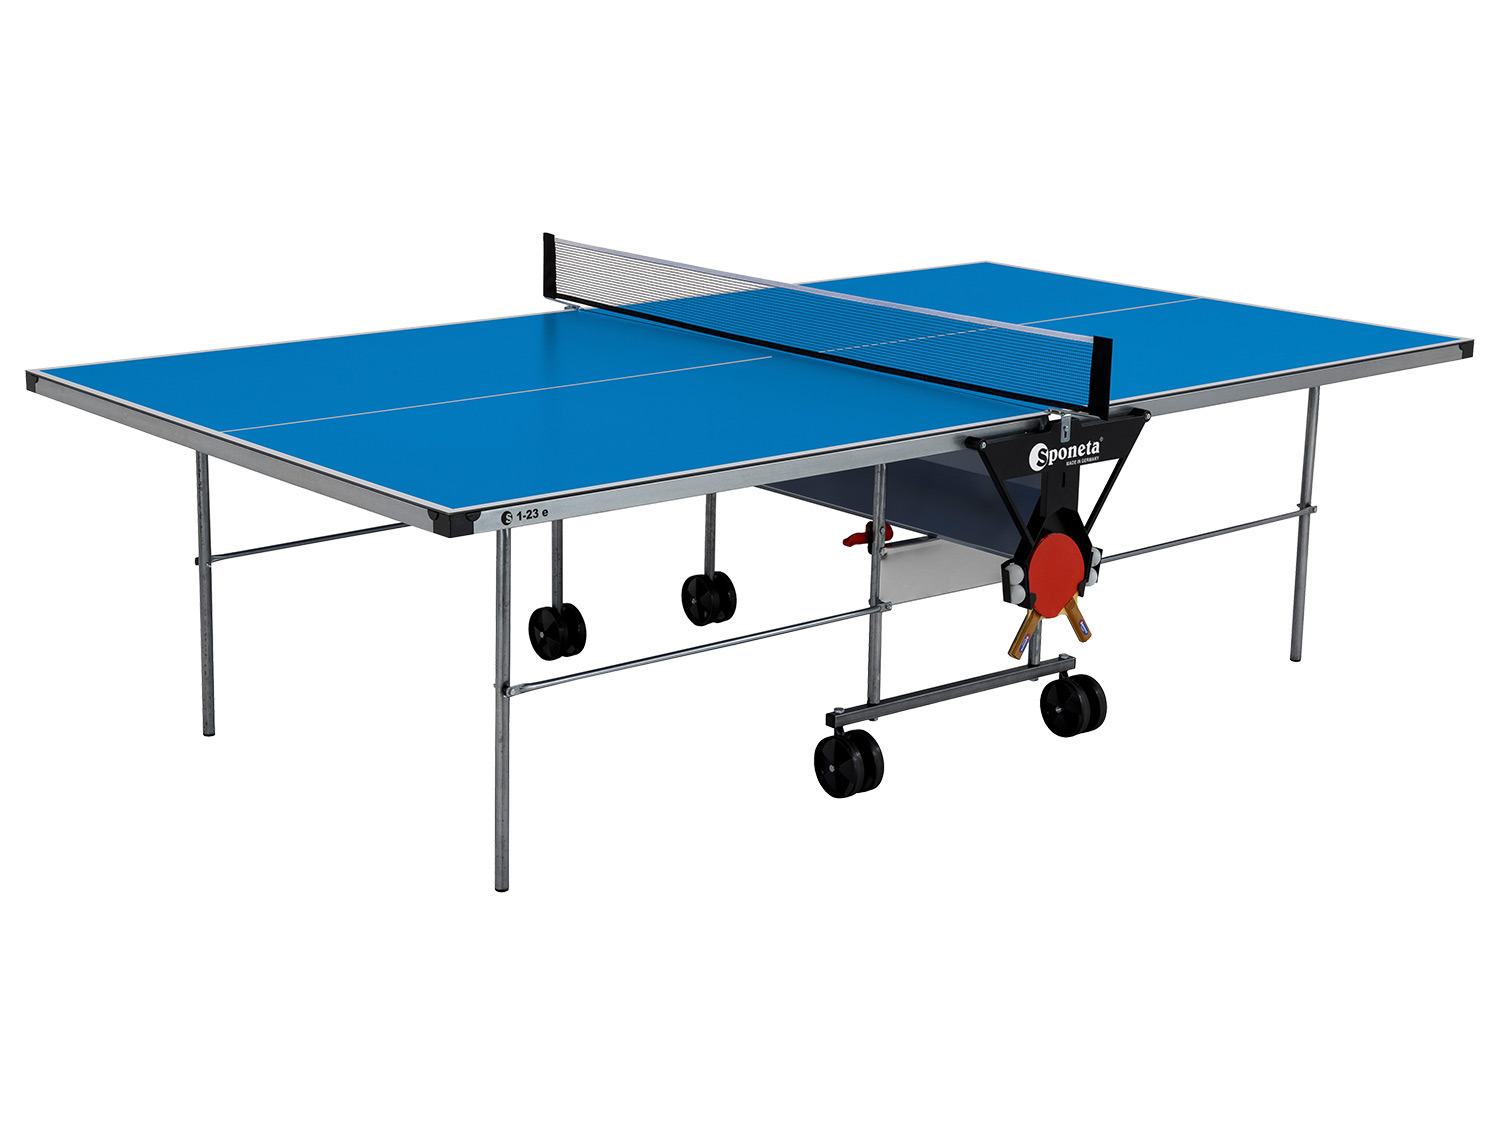 Sponeta Tischtennisplatte »S1-23e« blau | LIDL